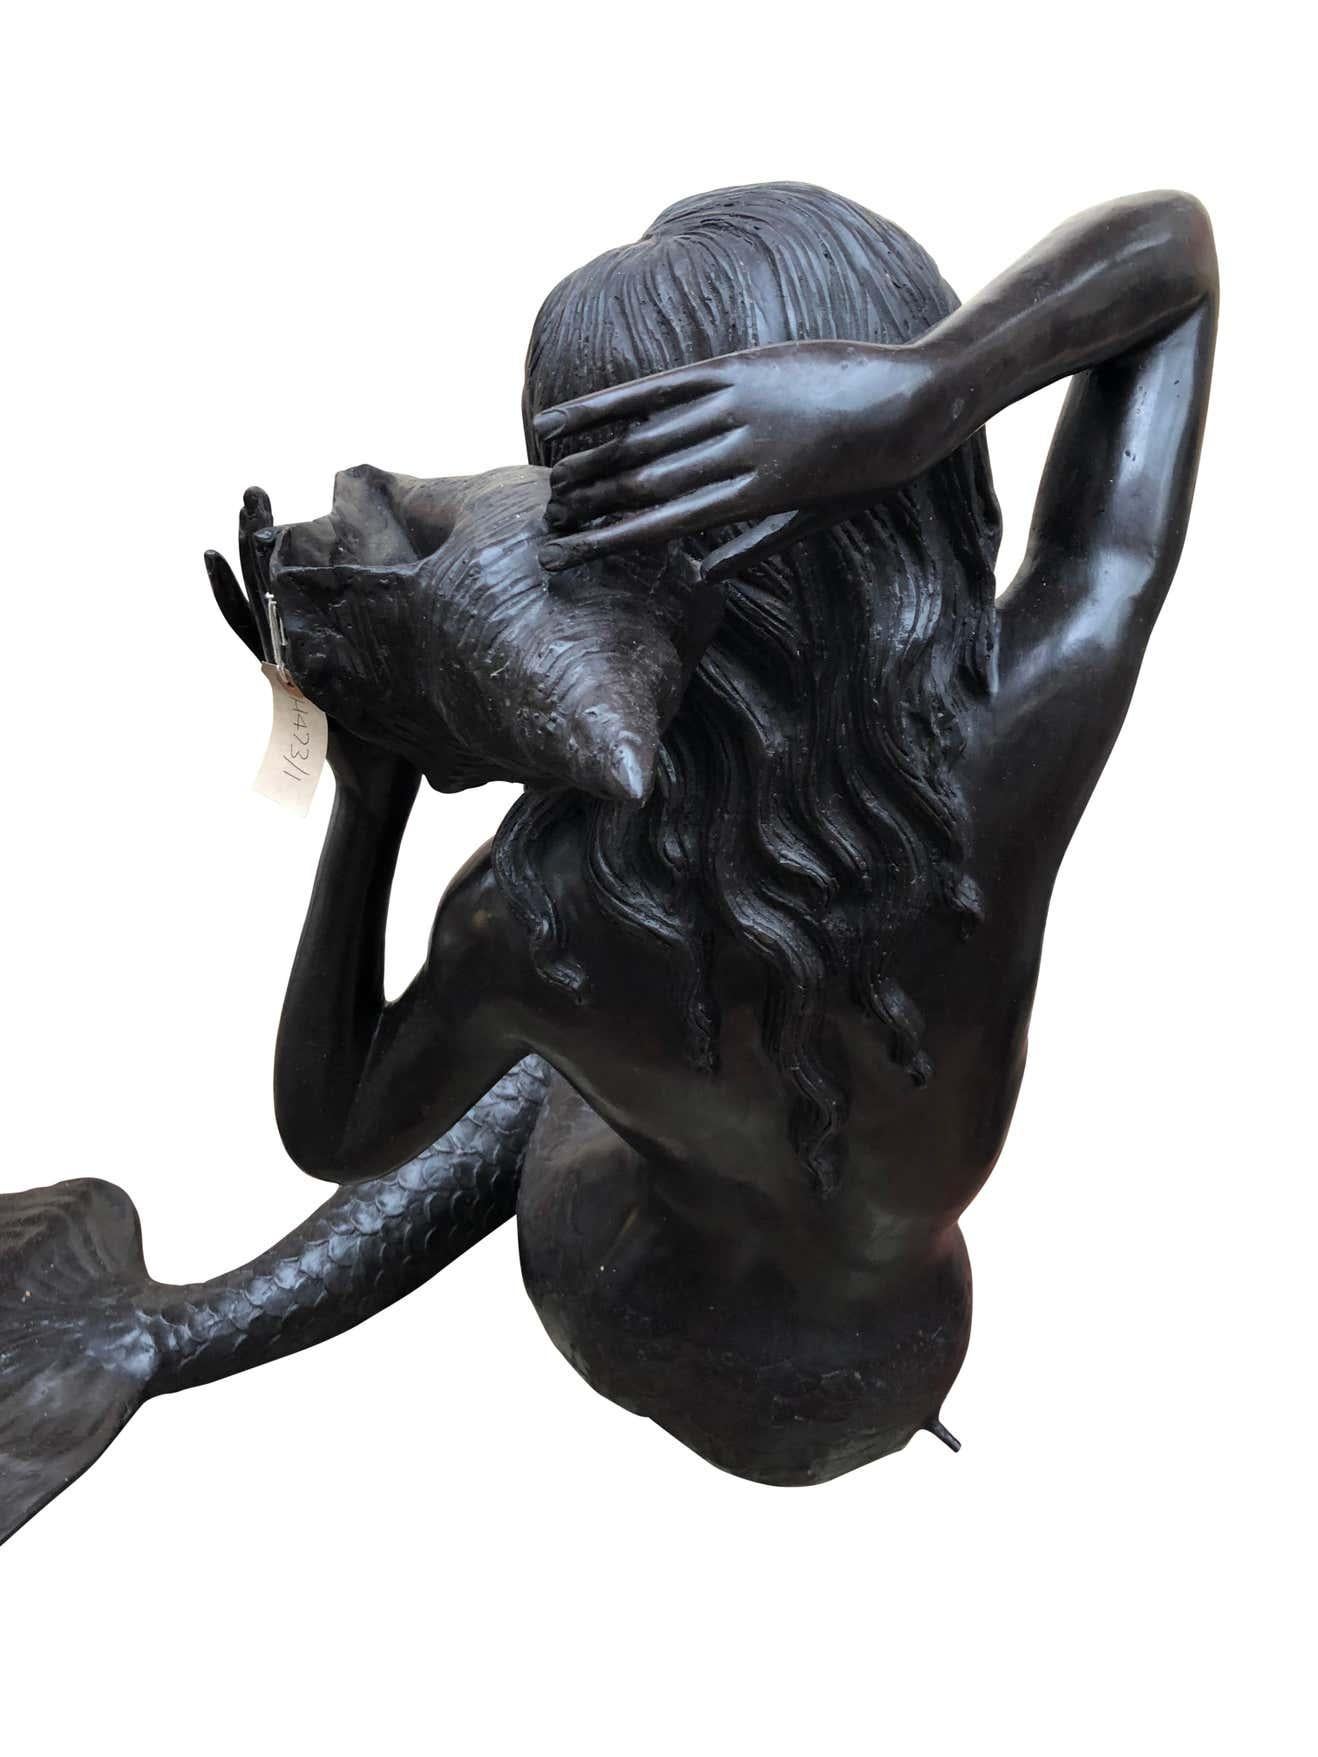 Italian Bronze Mermaid Fountain Garden Statue Siren Female Figurine, 20th Century